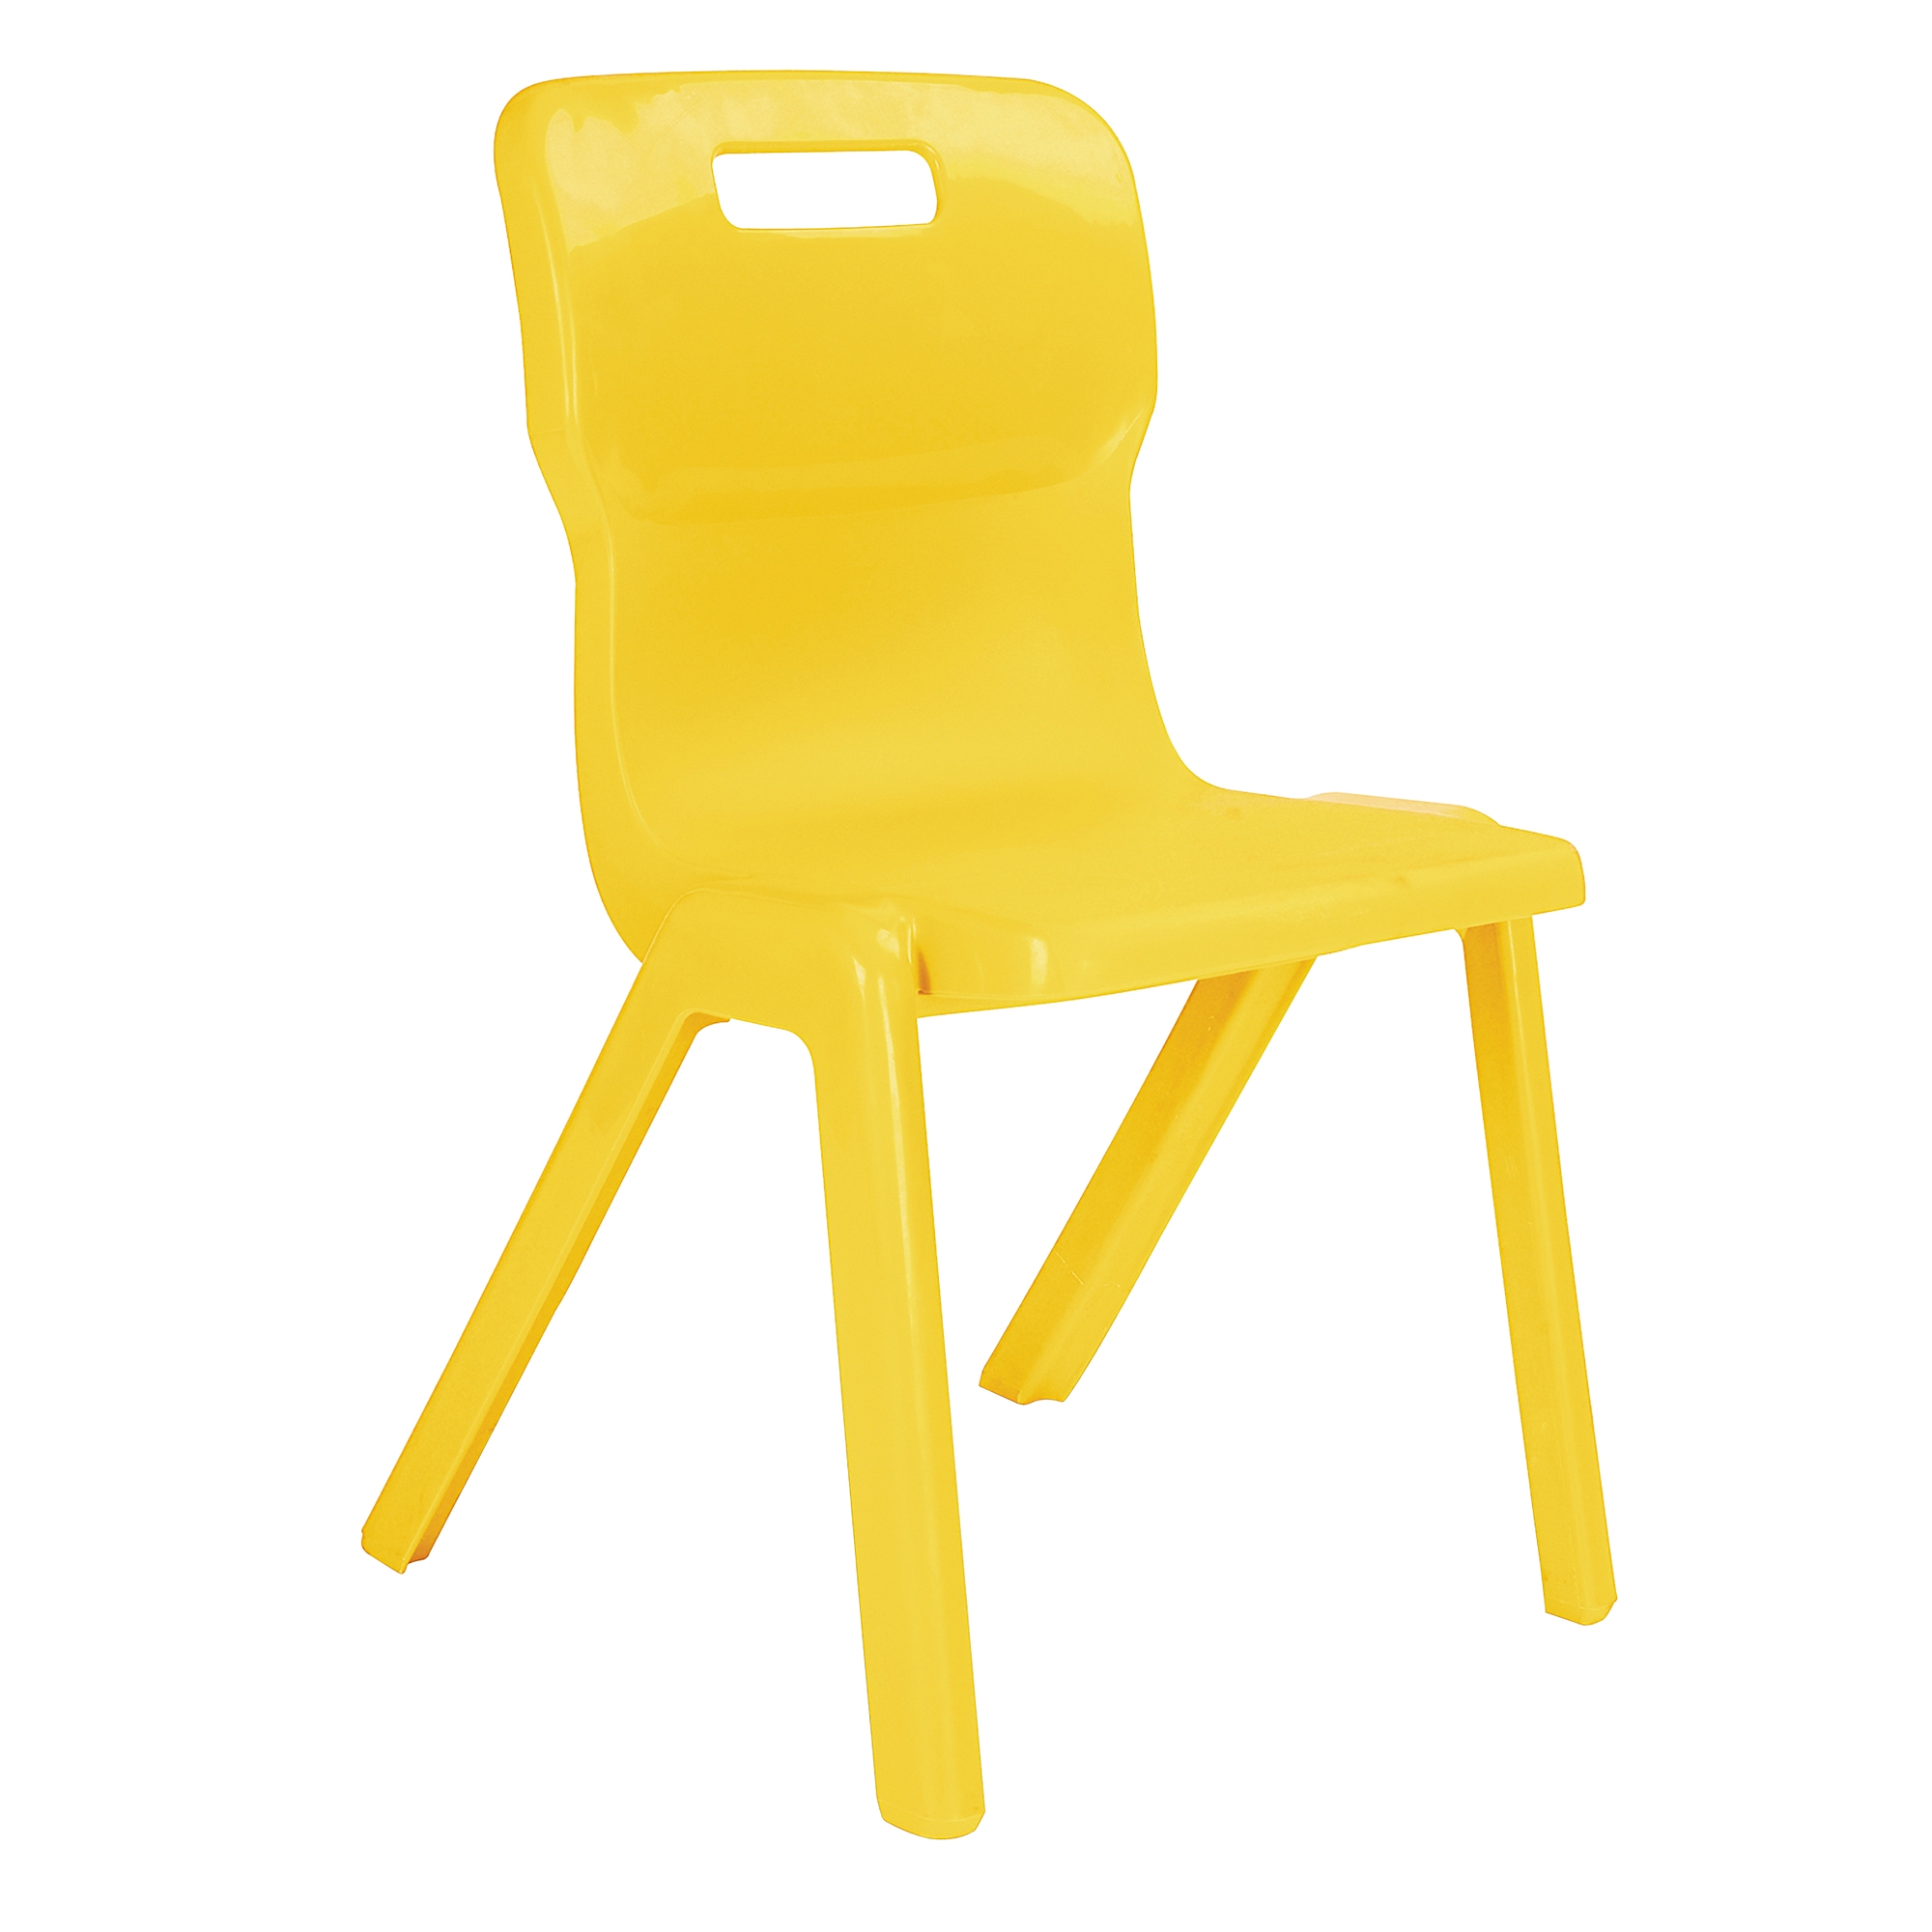 One Piece Titan Chair - Size 6 Age 14+ Yellow